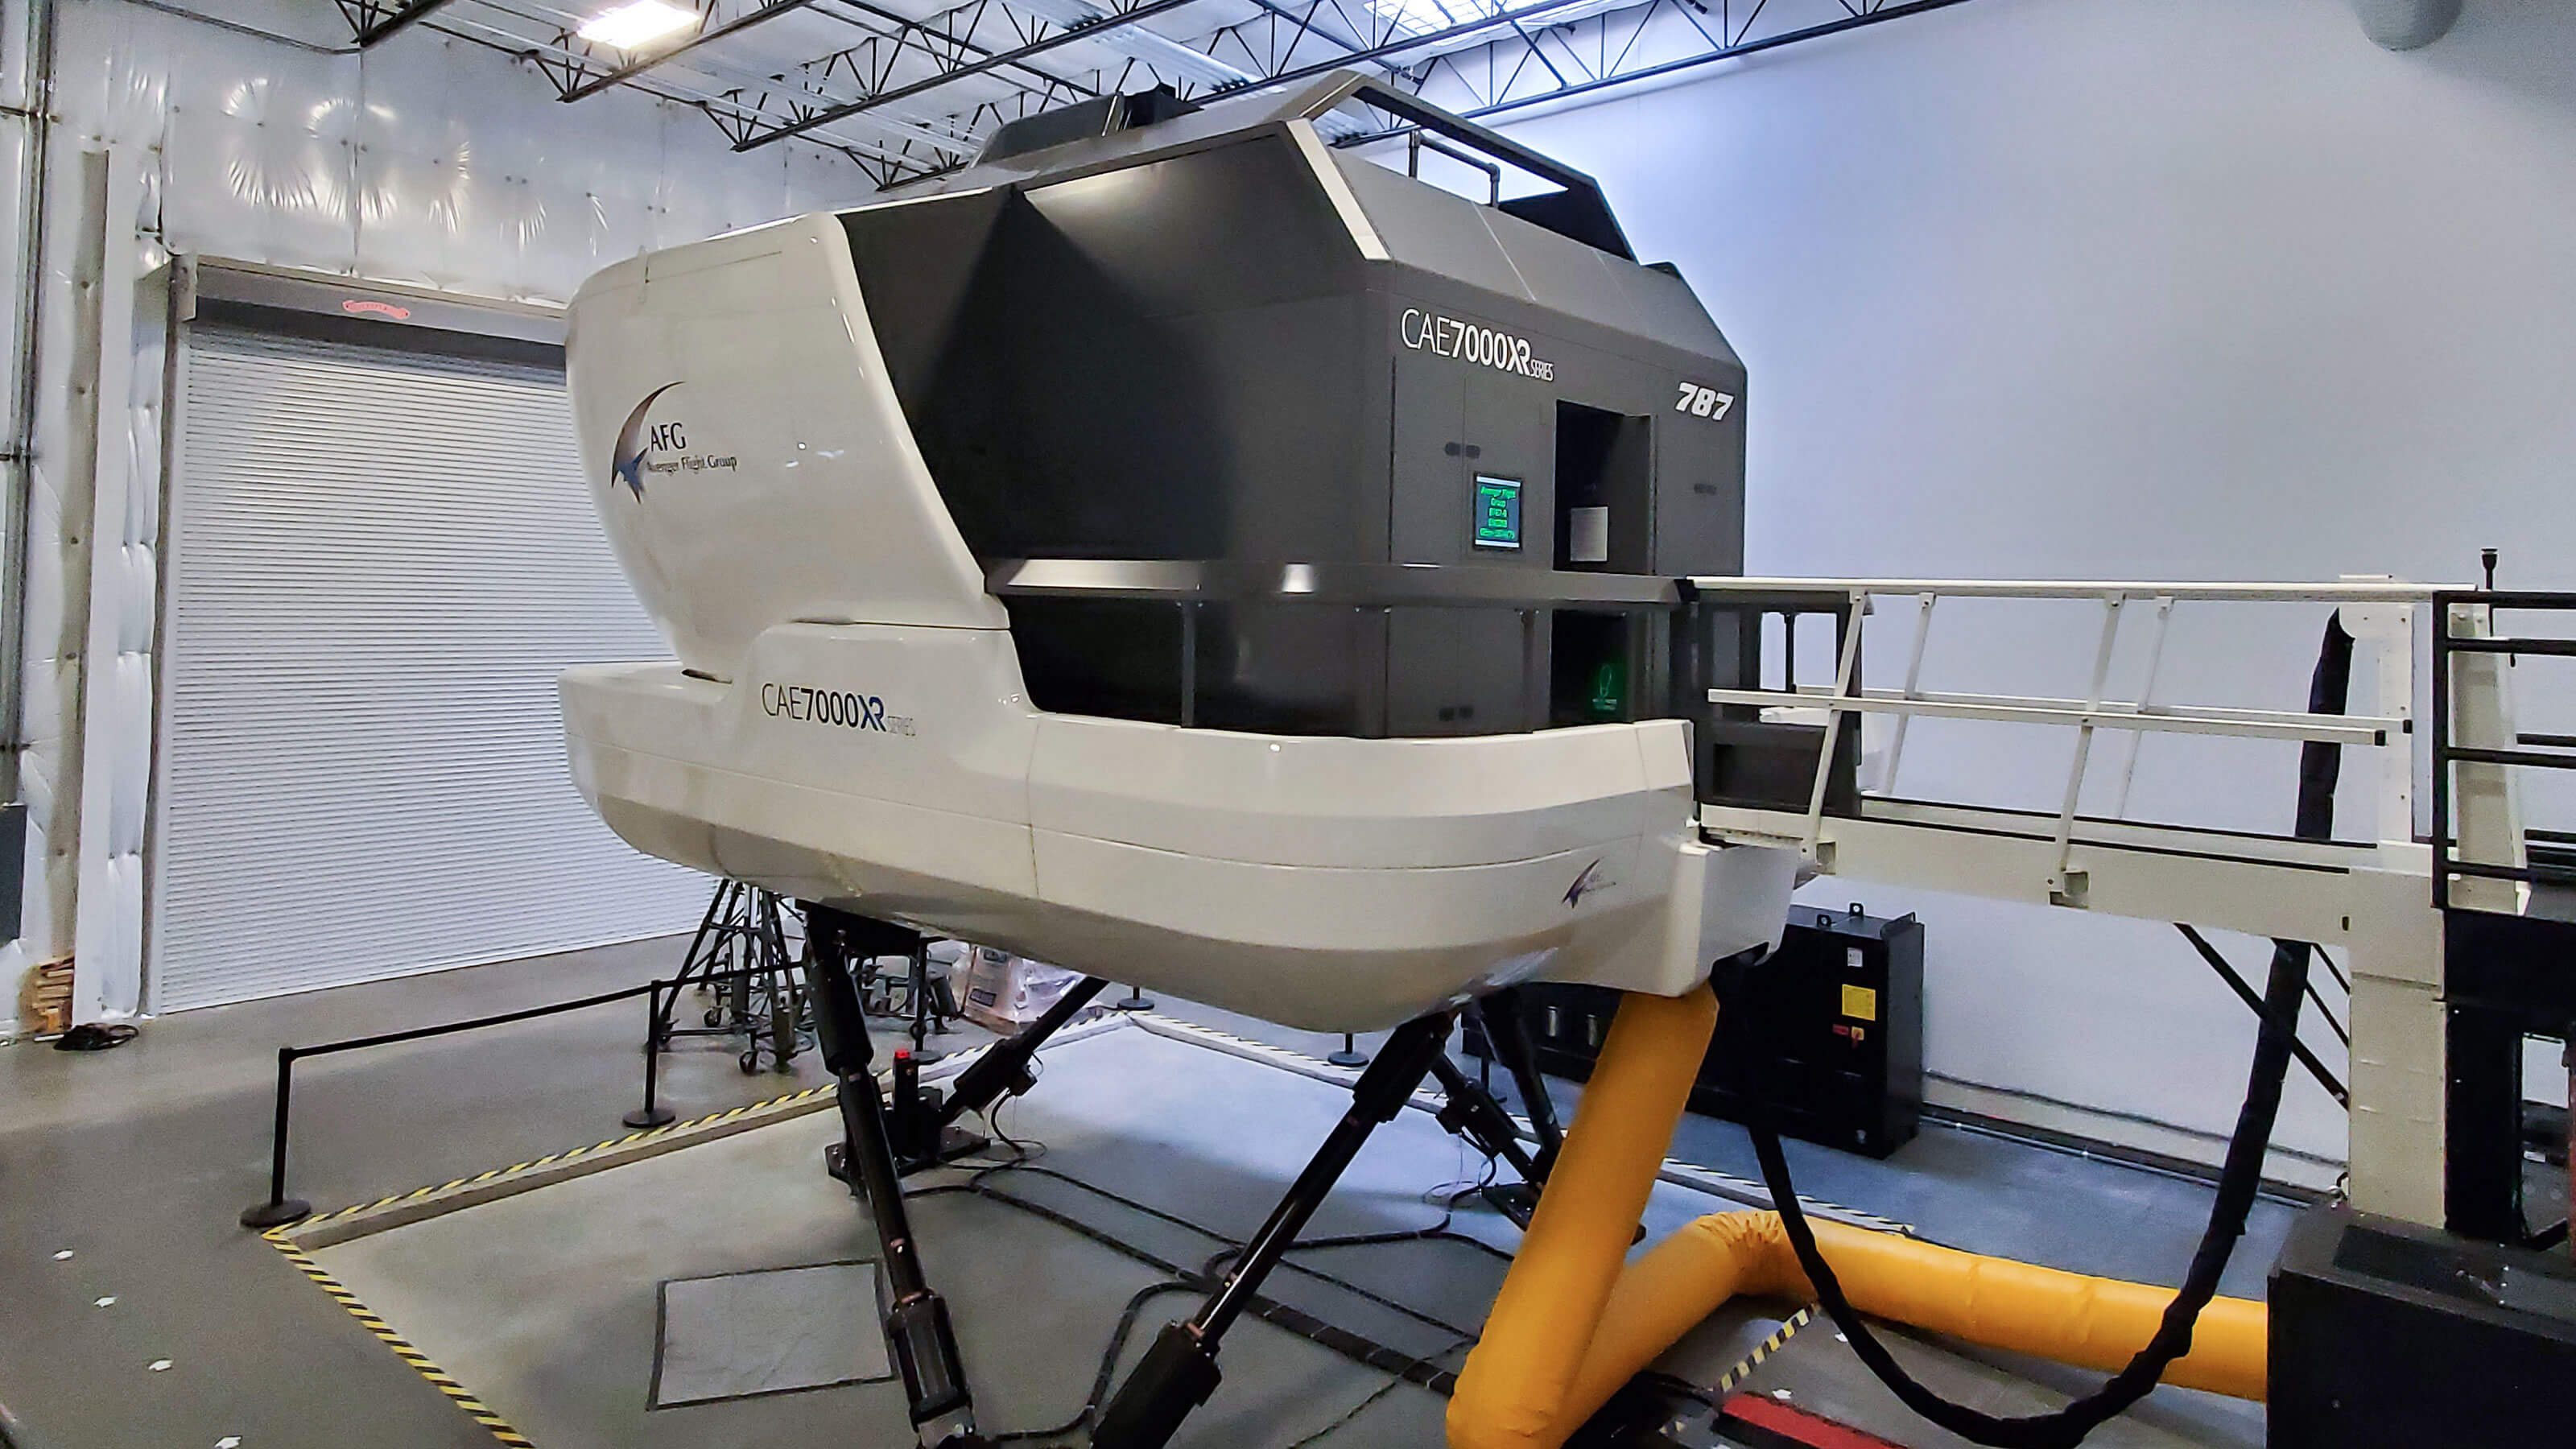 Airline Career Pilot Program students train in full-motion simulators at ATP JETS in Dallas, TX.